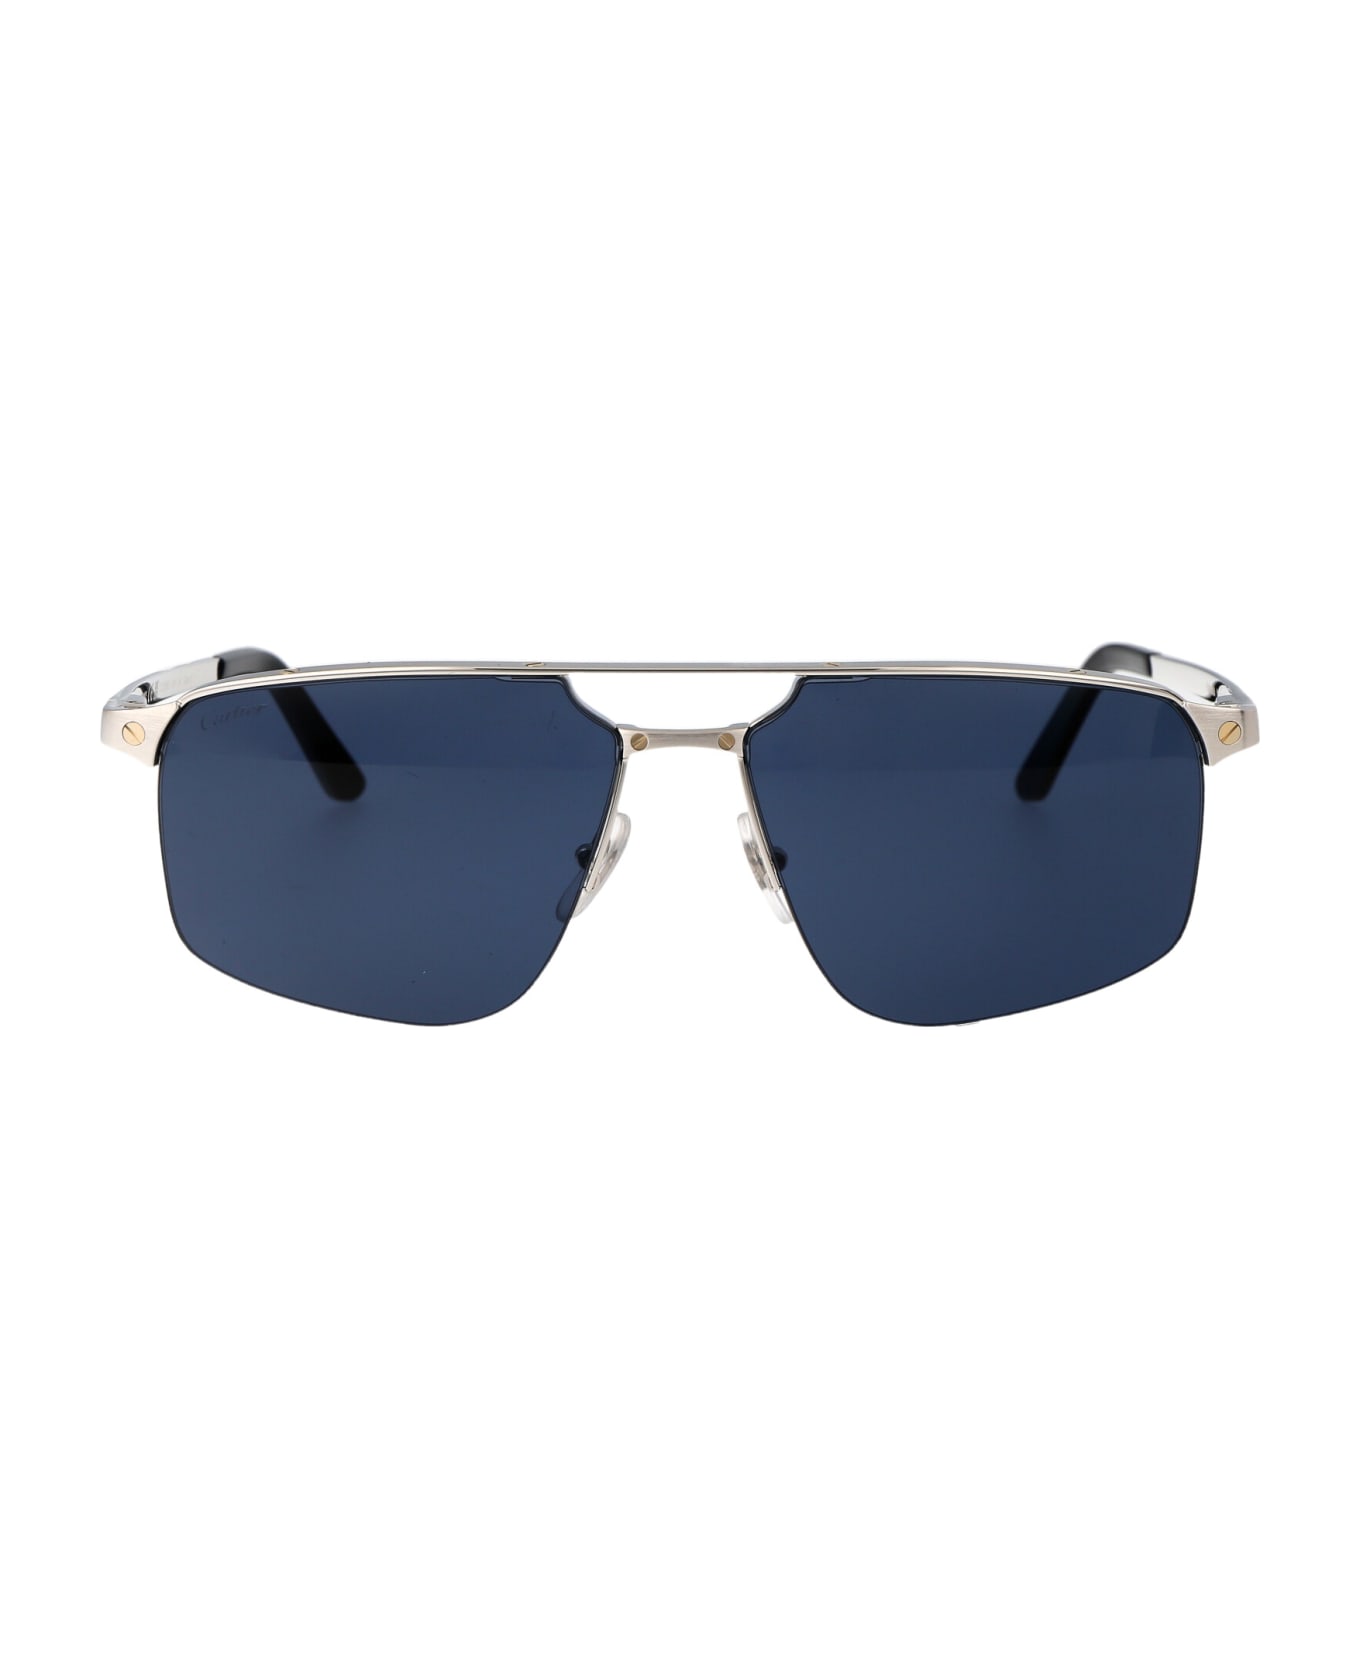 Cartier Eyewear Ct0385s Sunglasses - 004 SILVER SILVER BLUE サングラス